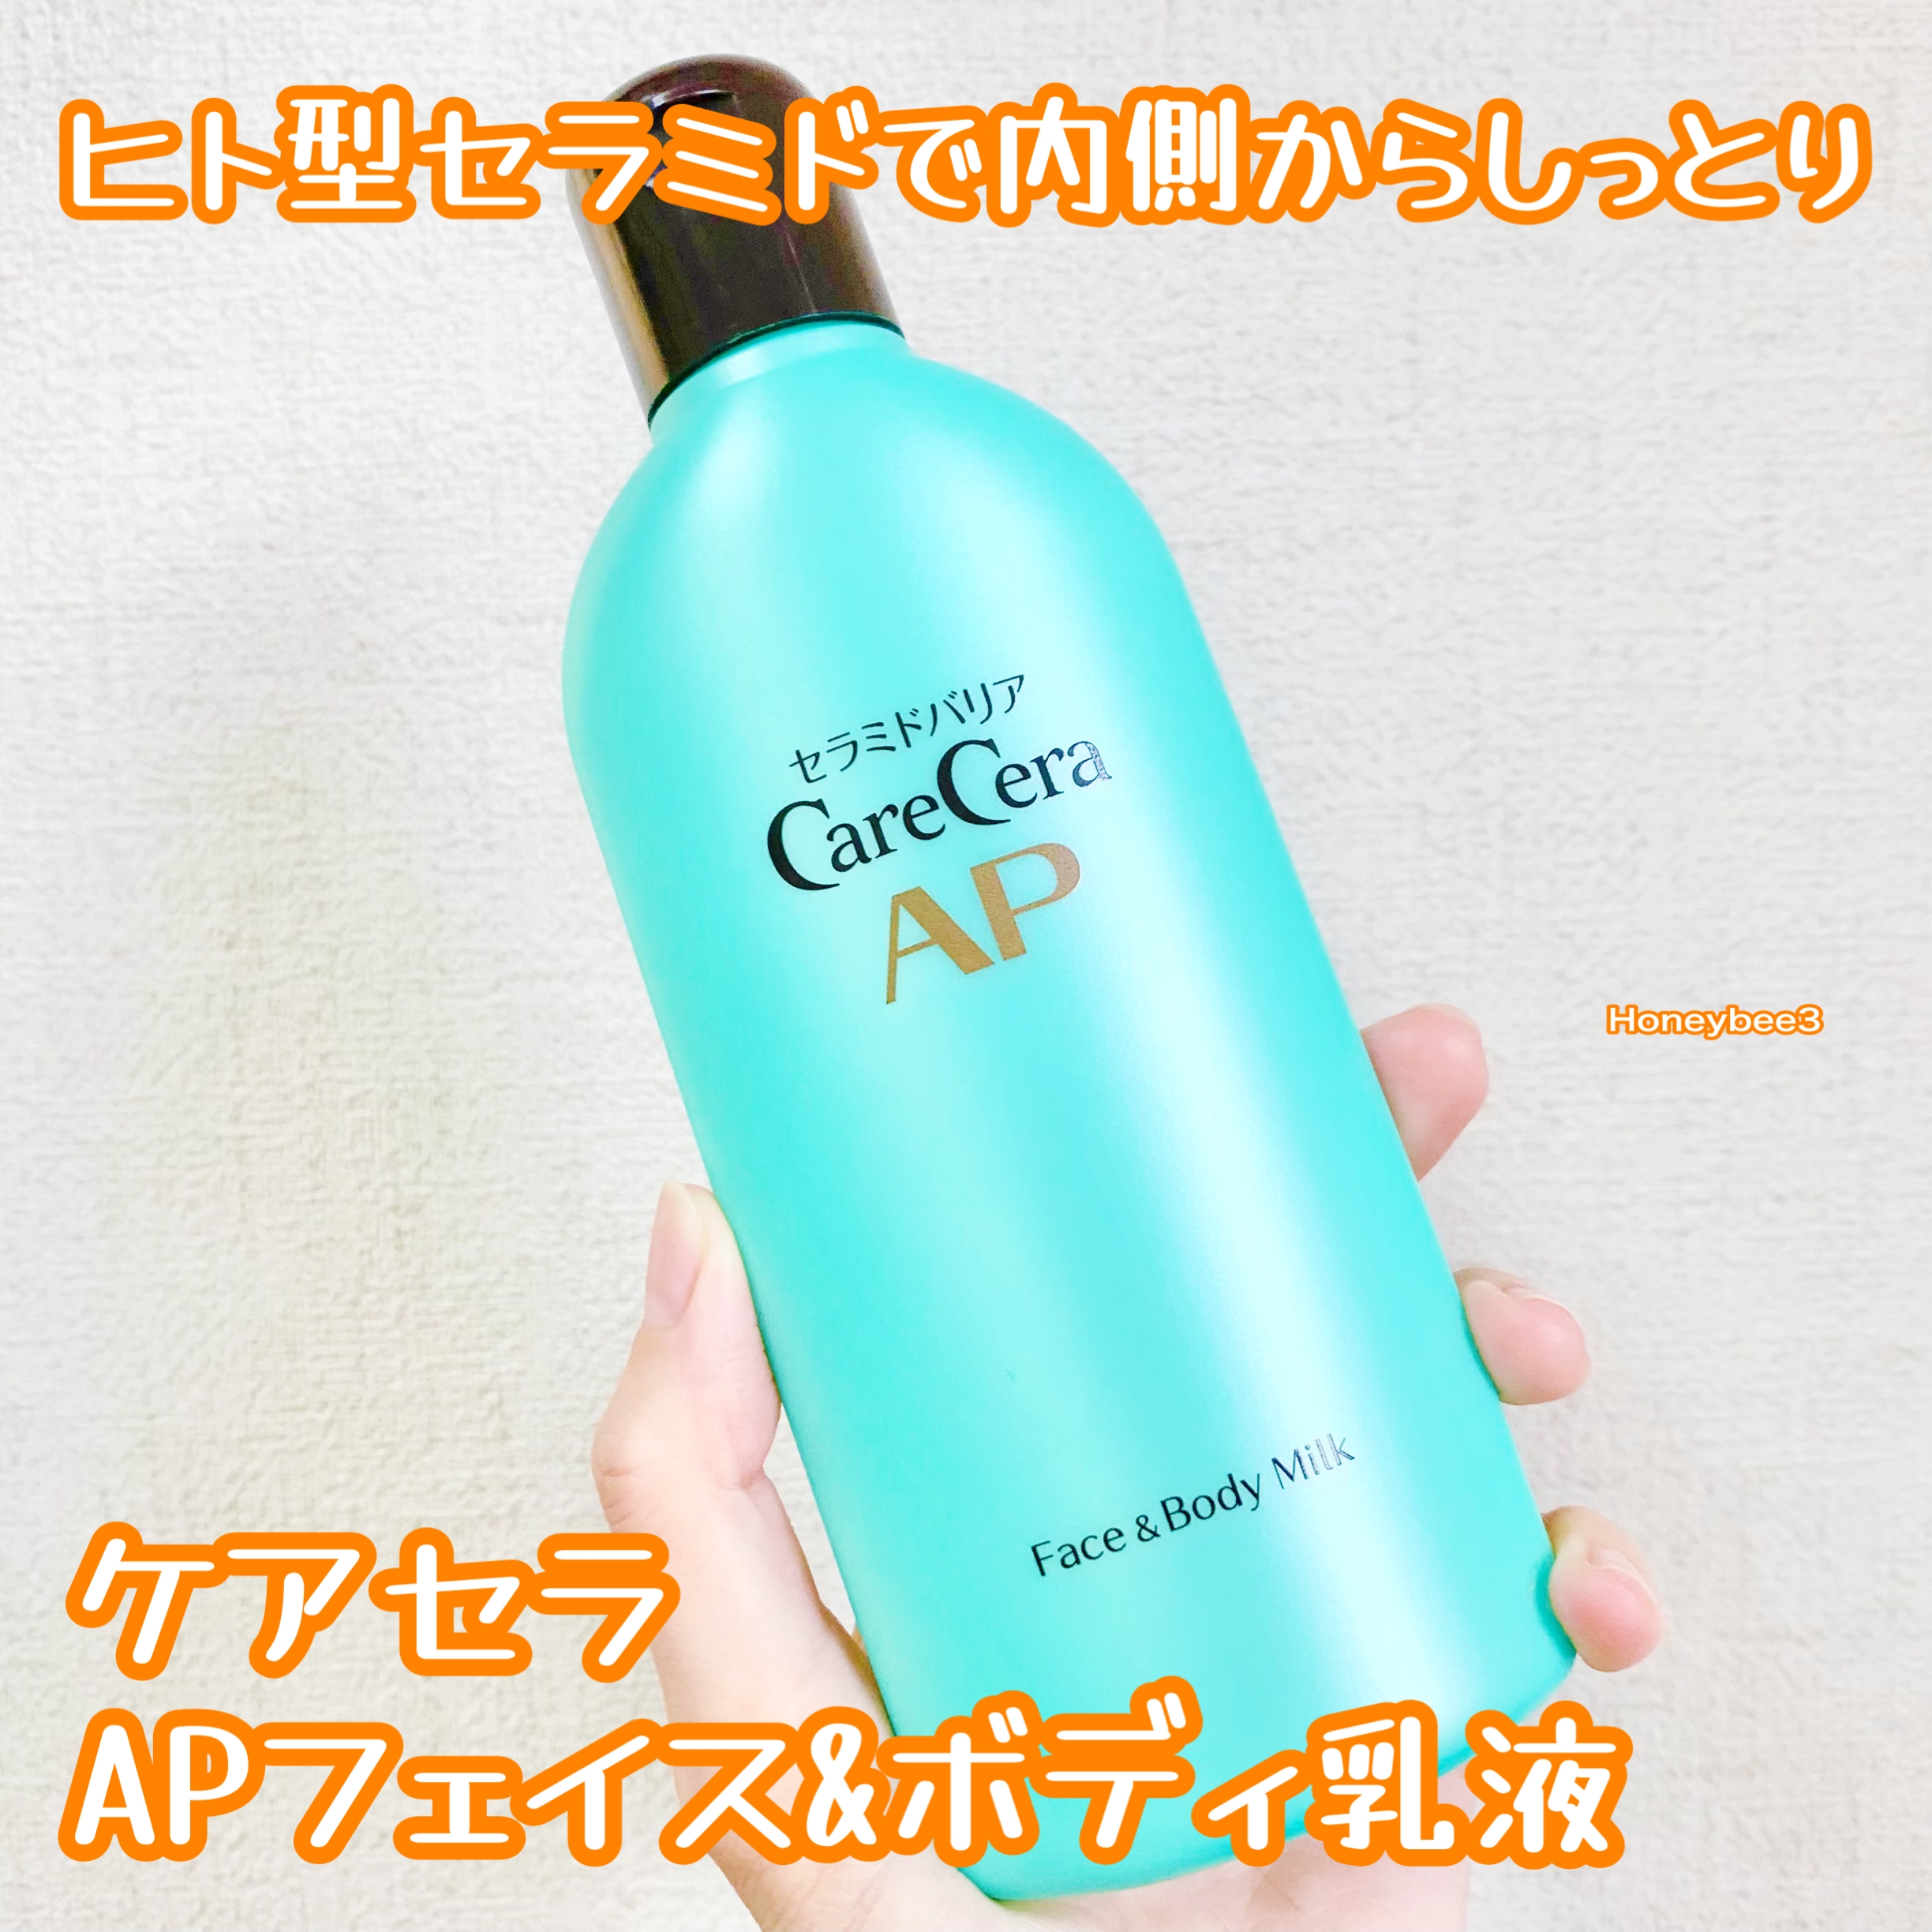 CareCera(ケアセラ) APフェイス&ボディ乳液の良い点・メリットに関するみつばちさんの口コミ画像2